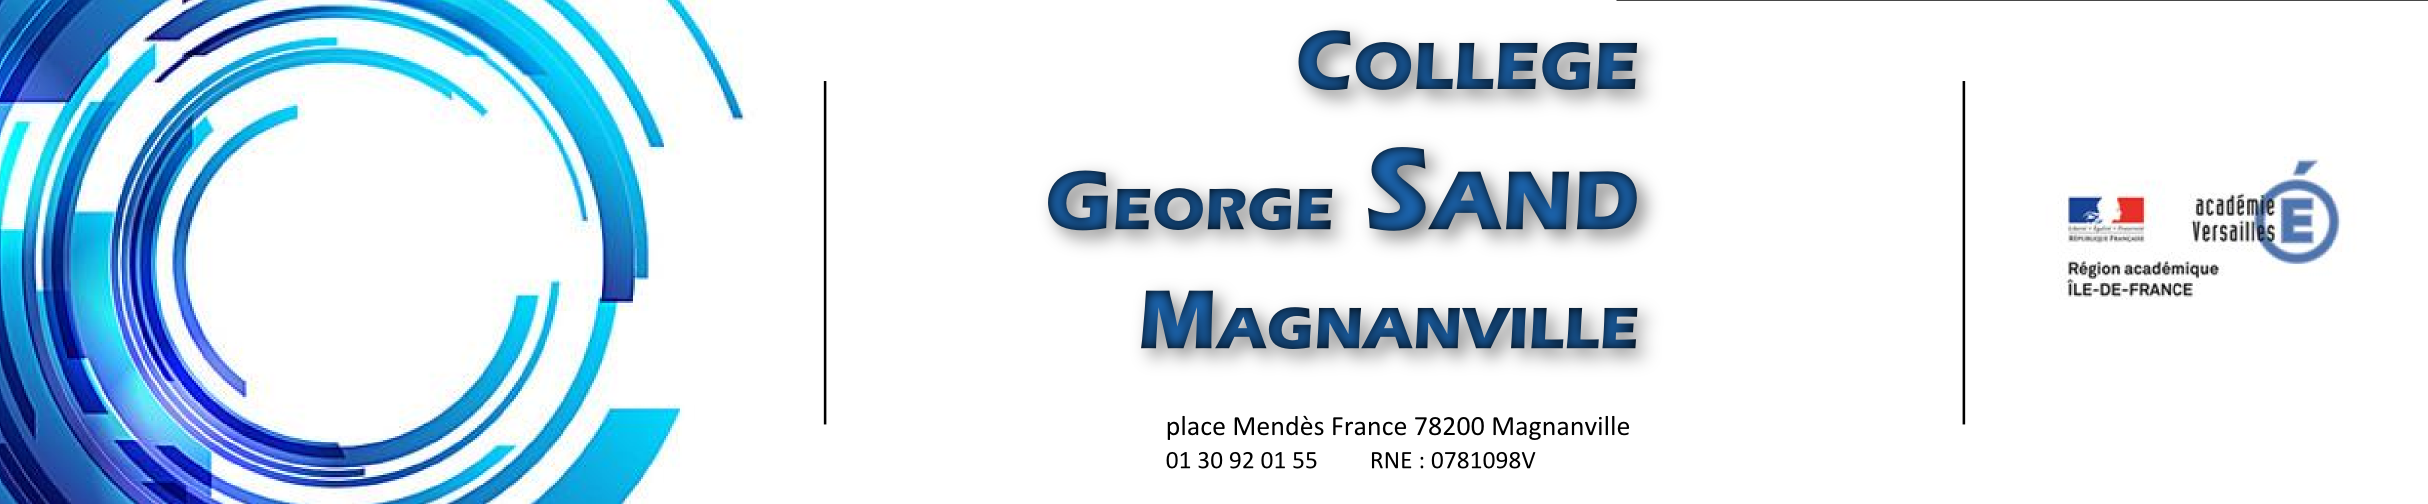 Collège George Sand